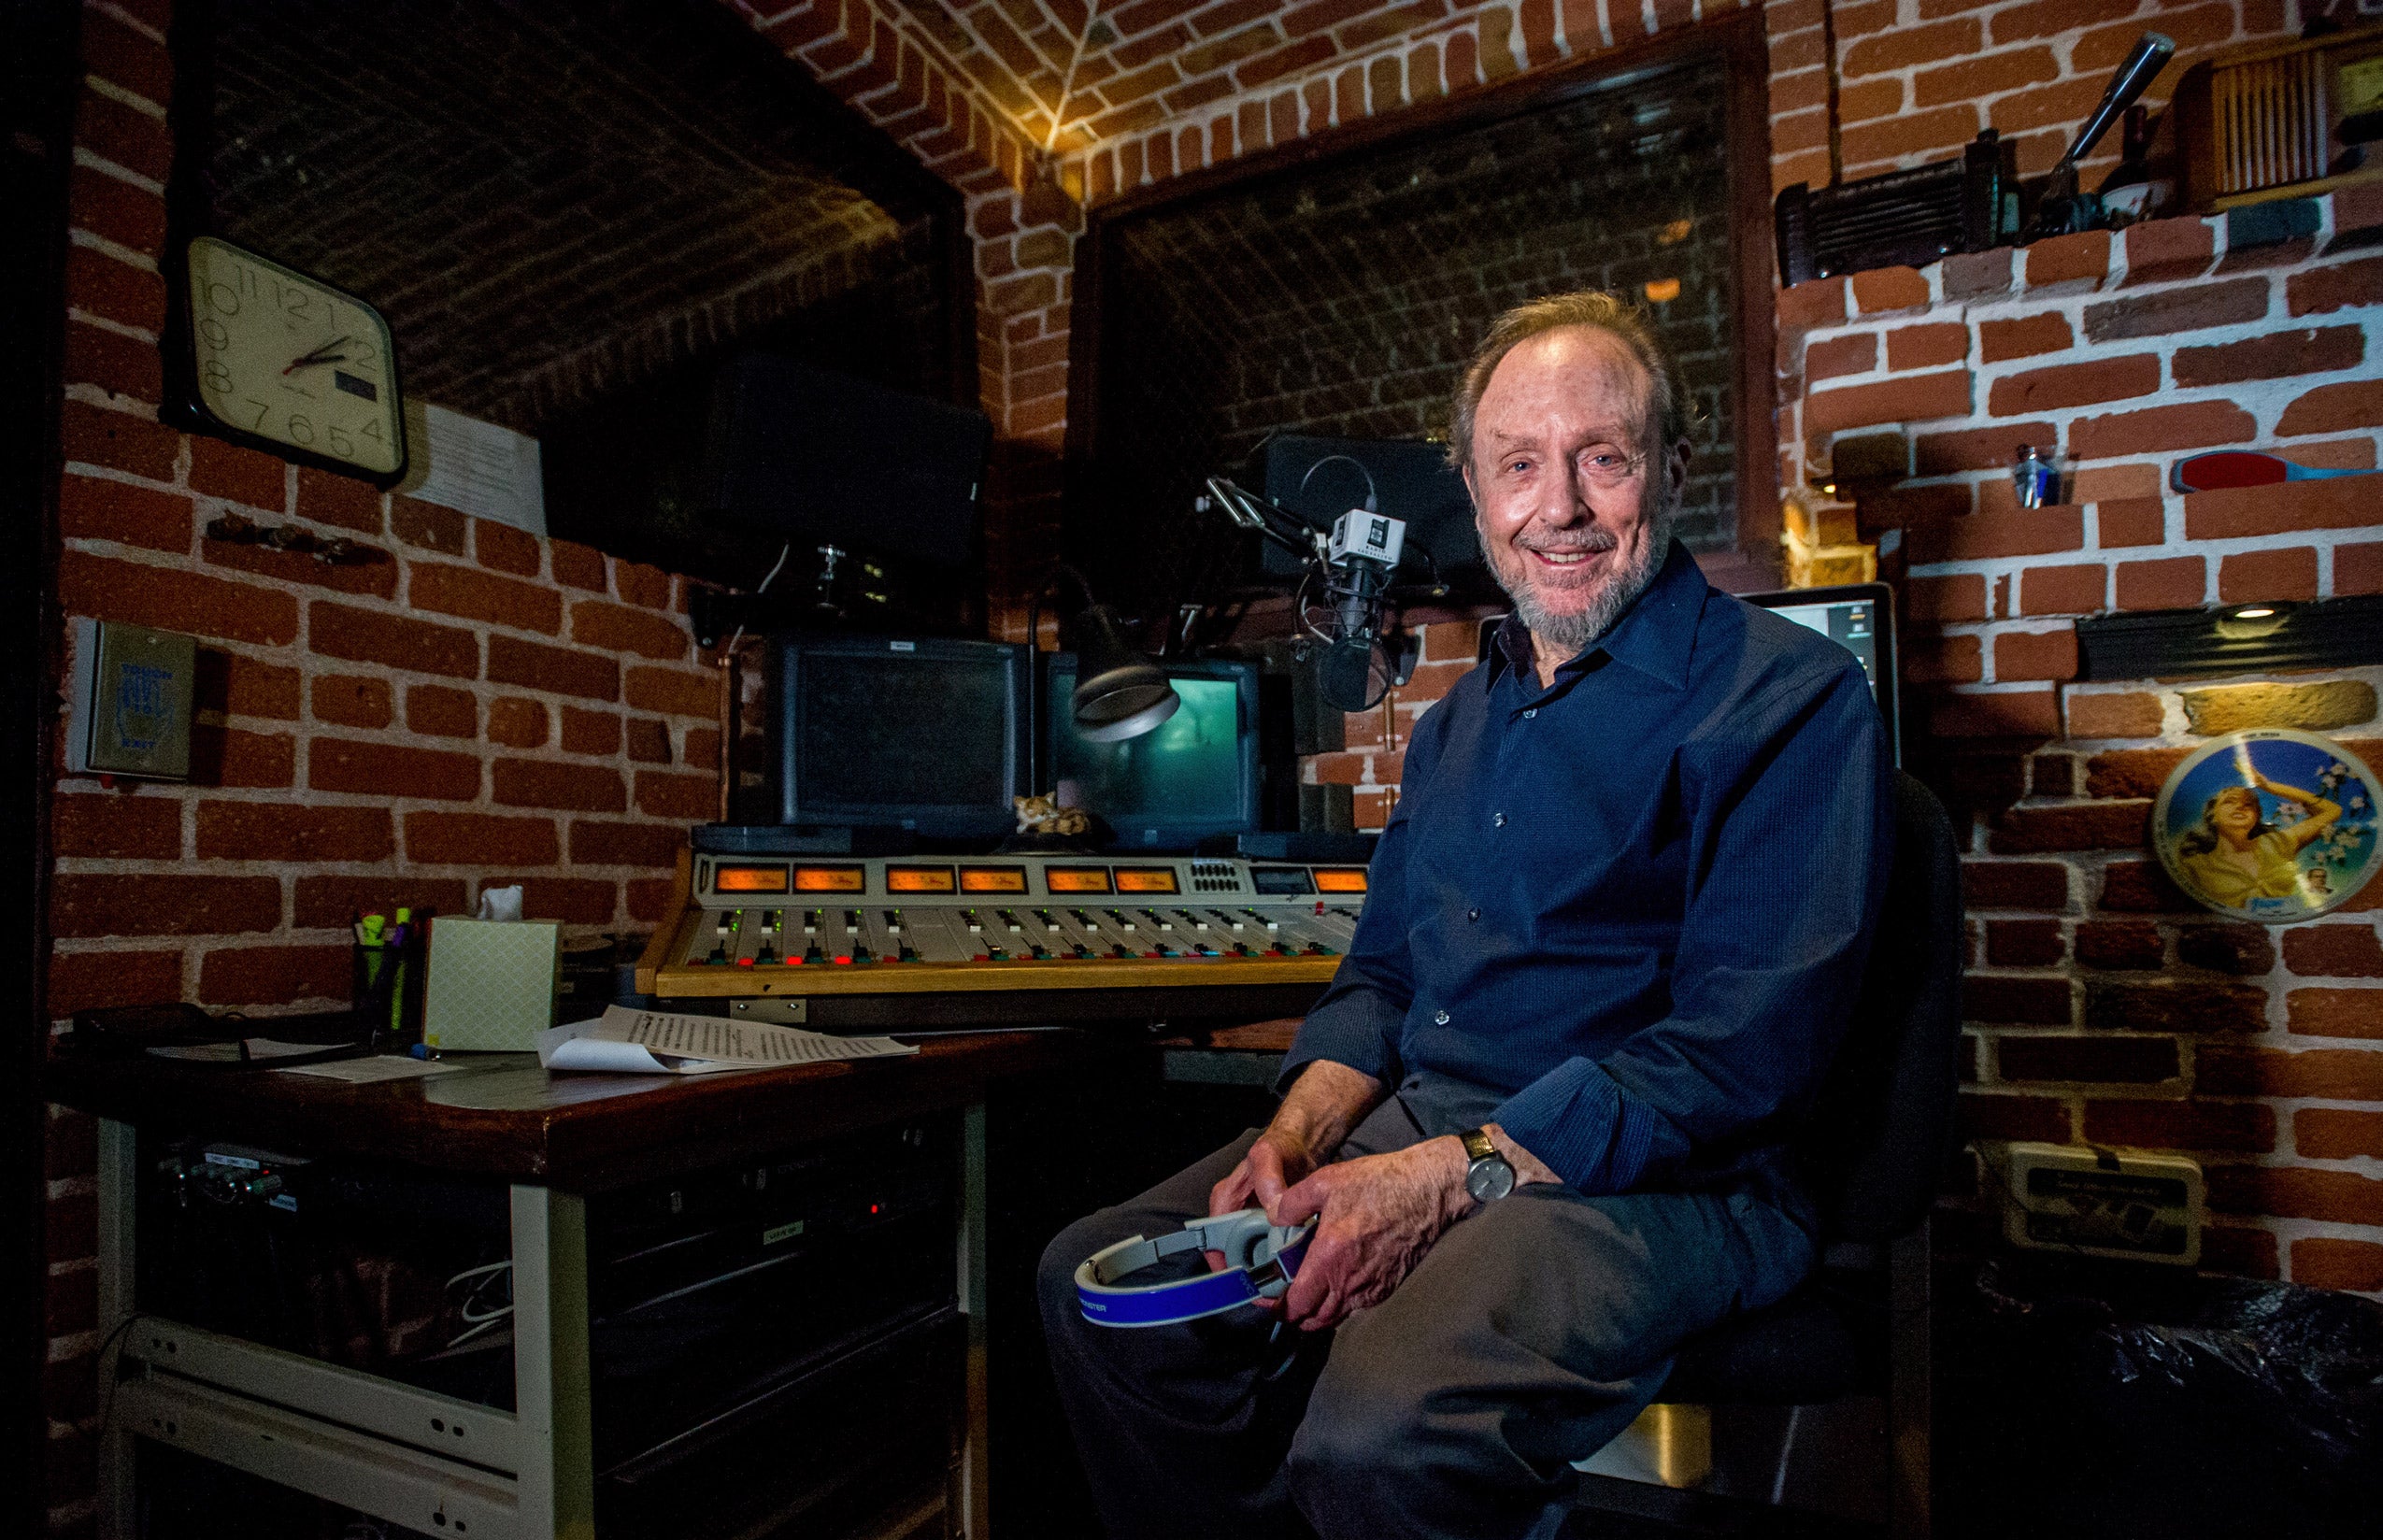 Portrait of a man sitting on a chair in a radio studio